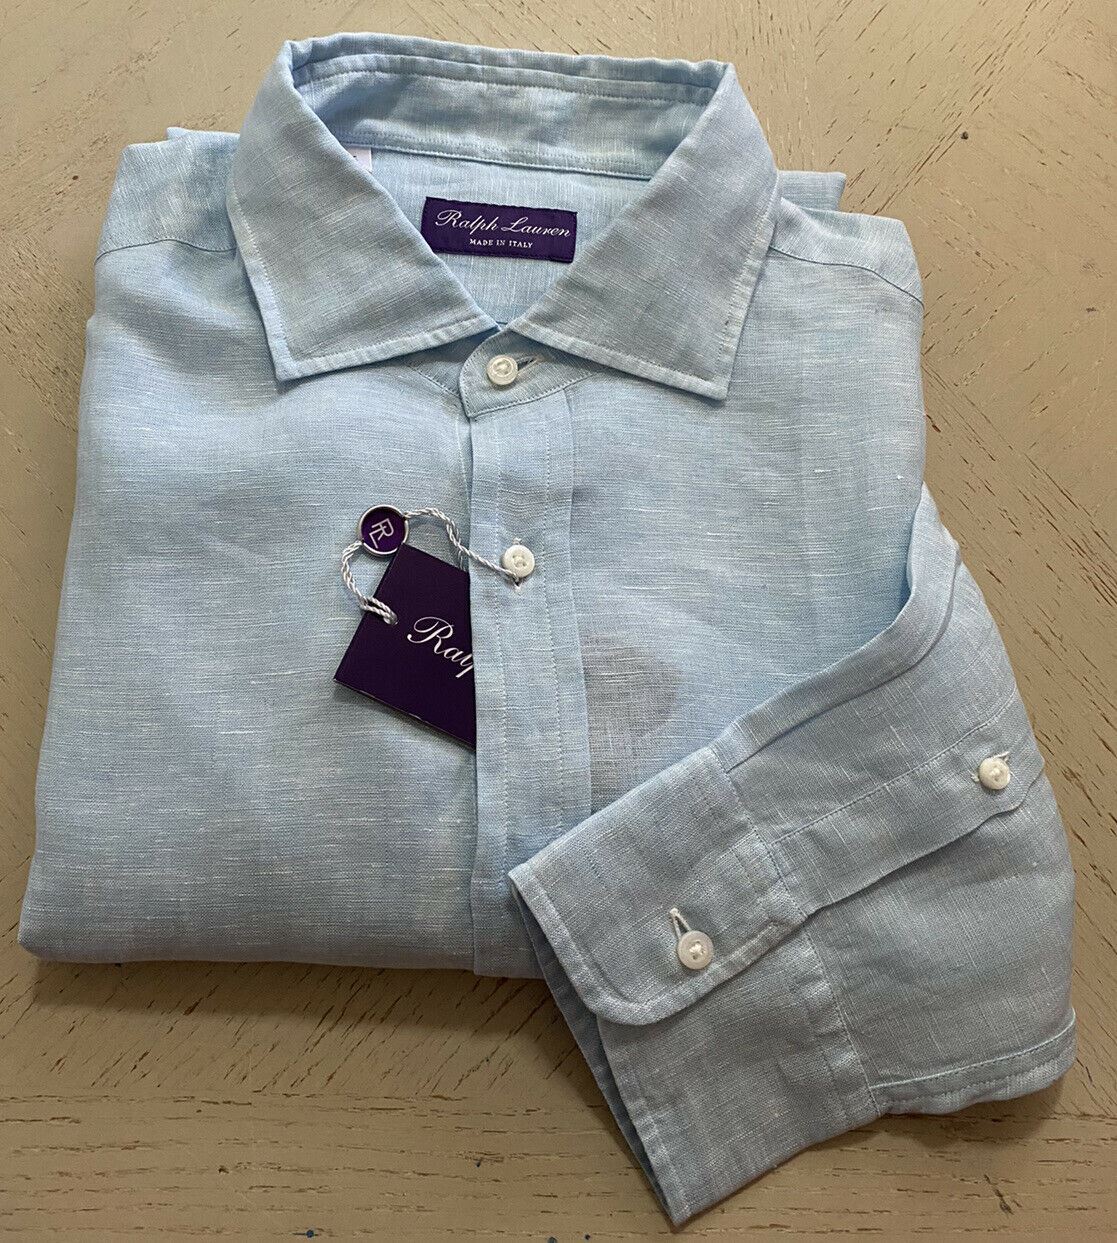 Neu mit Etikett: 450 $ Ralph Lauren Purple Label Herren Leinenhemd Blau 42/16,5 Italien